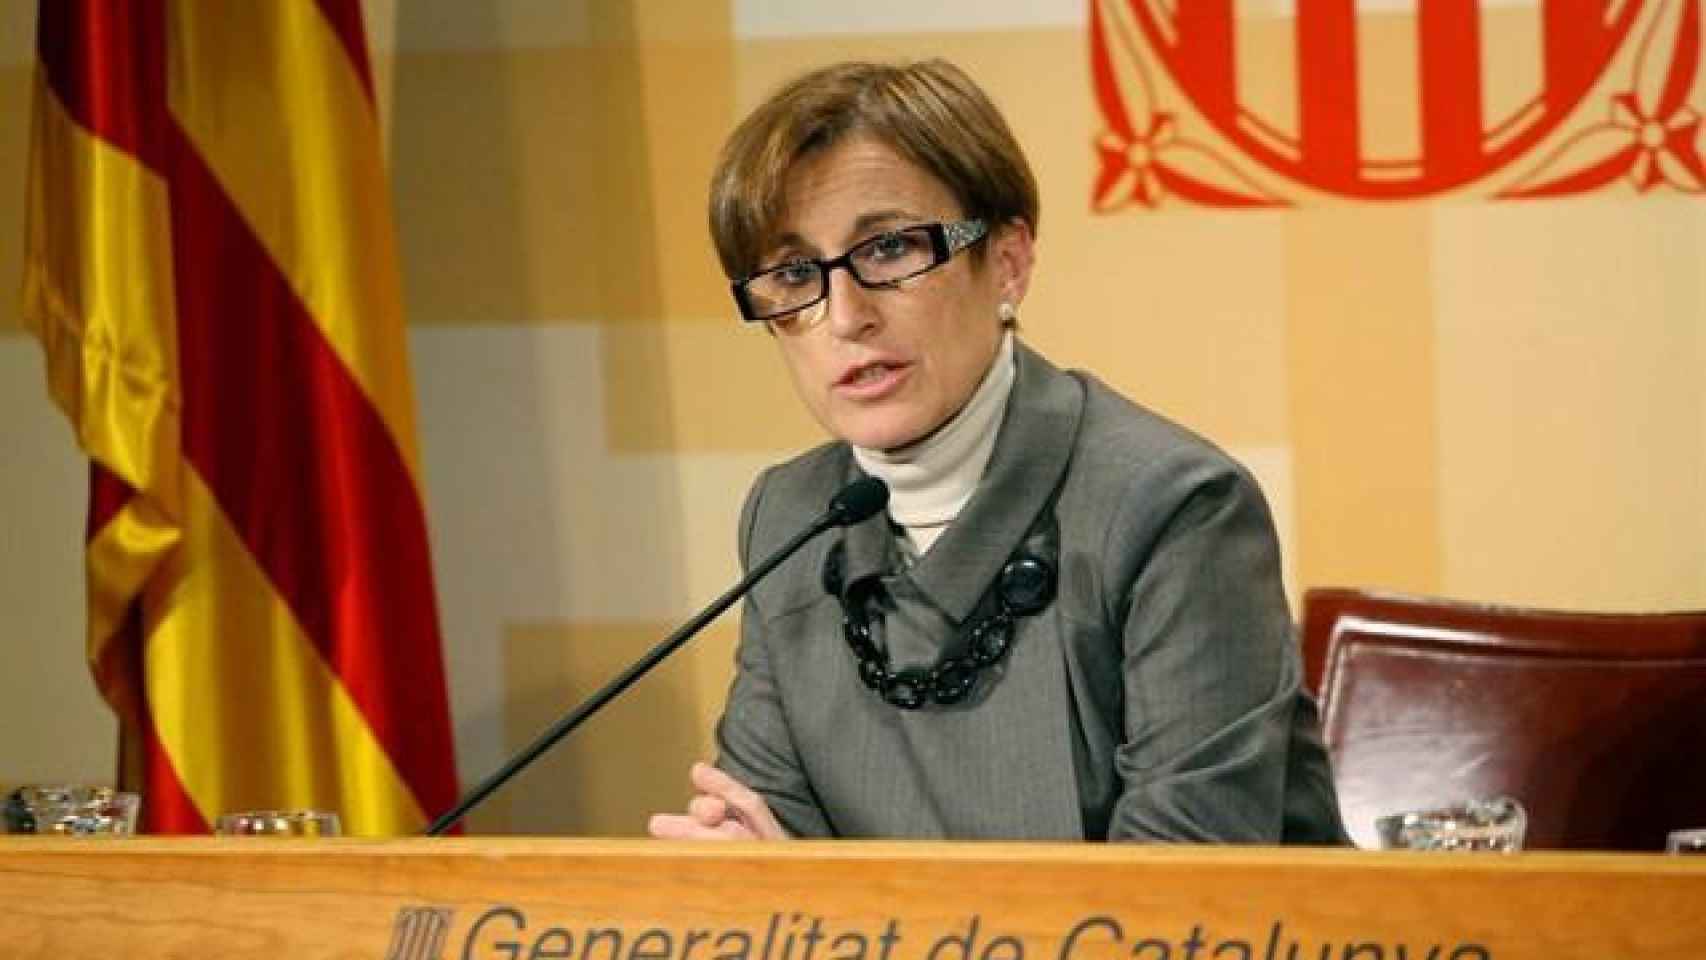 La exconsejera de Trabajo de la Generalitat, Mar Serna, será magistrada del CGPJ